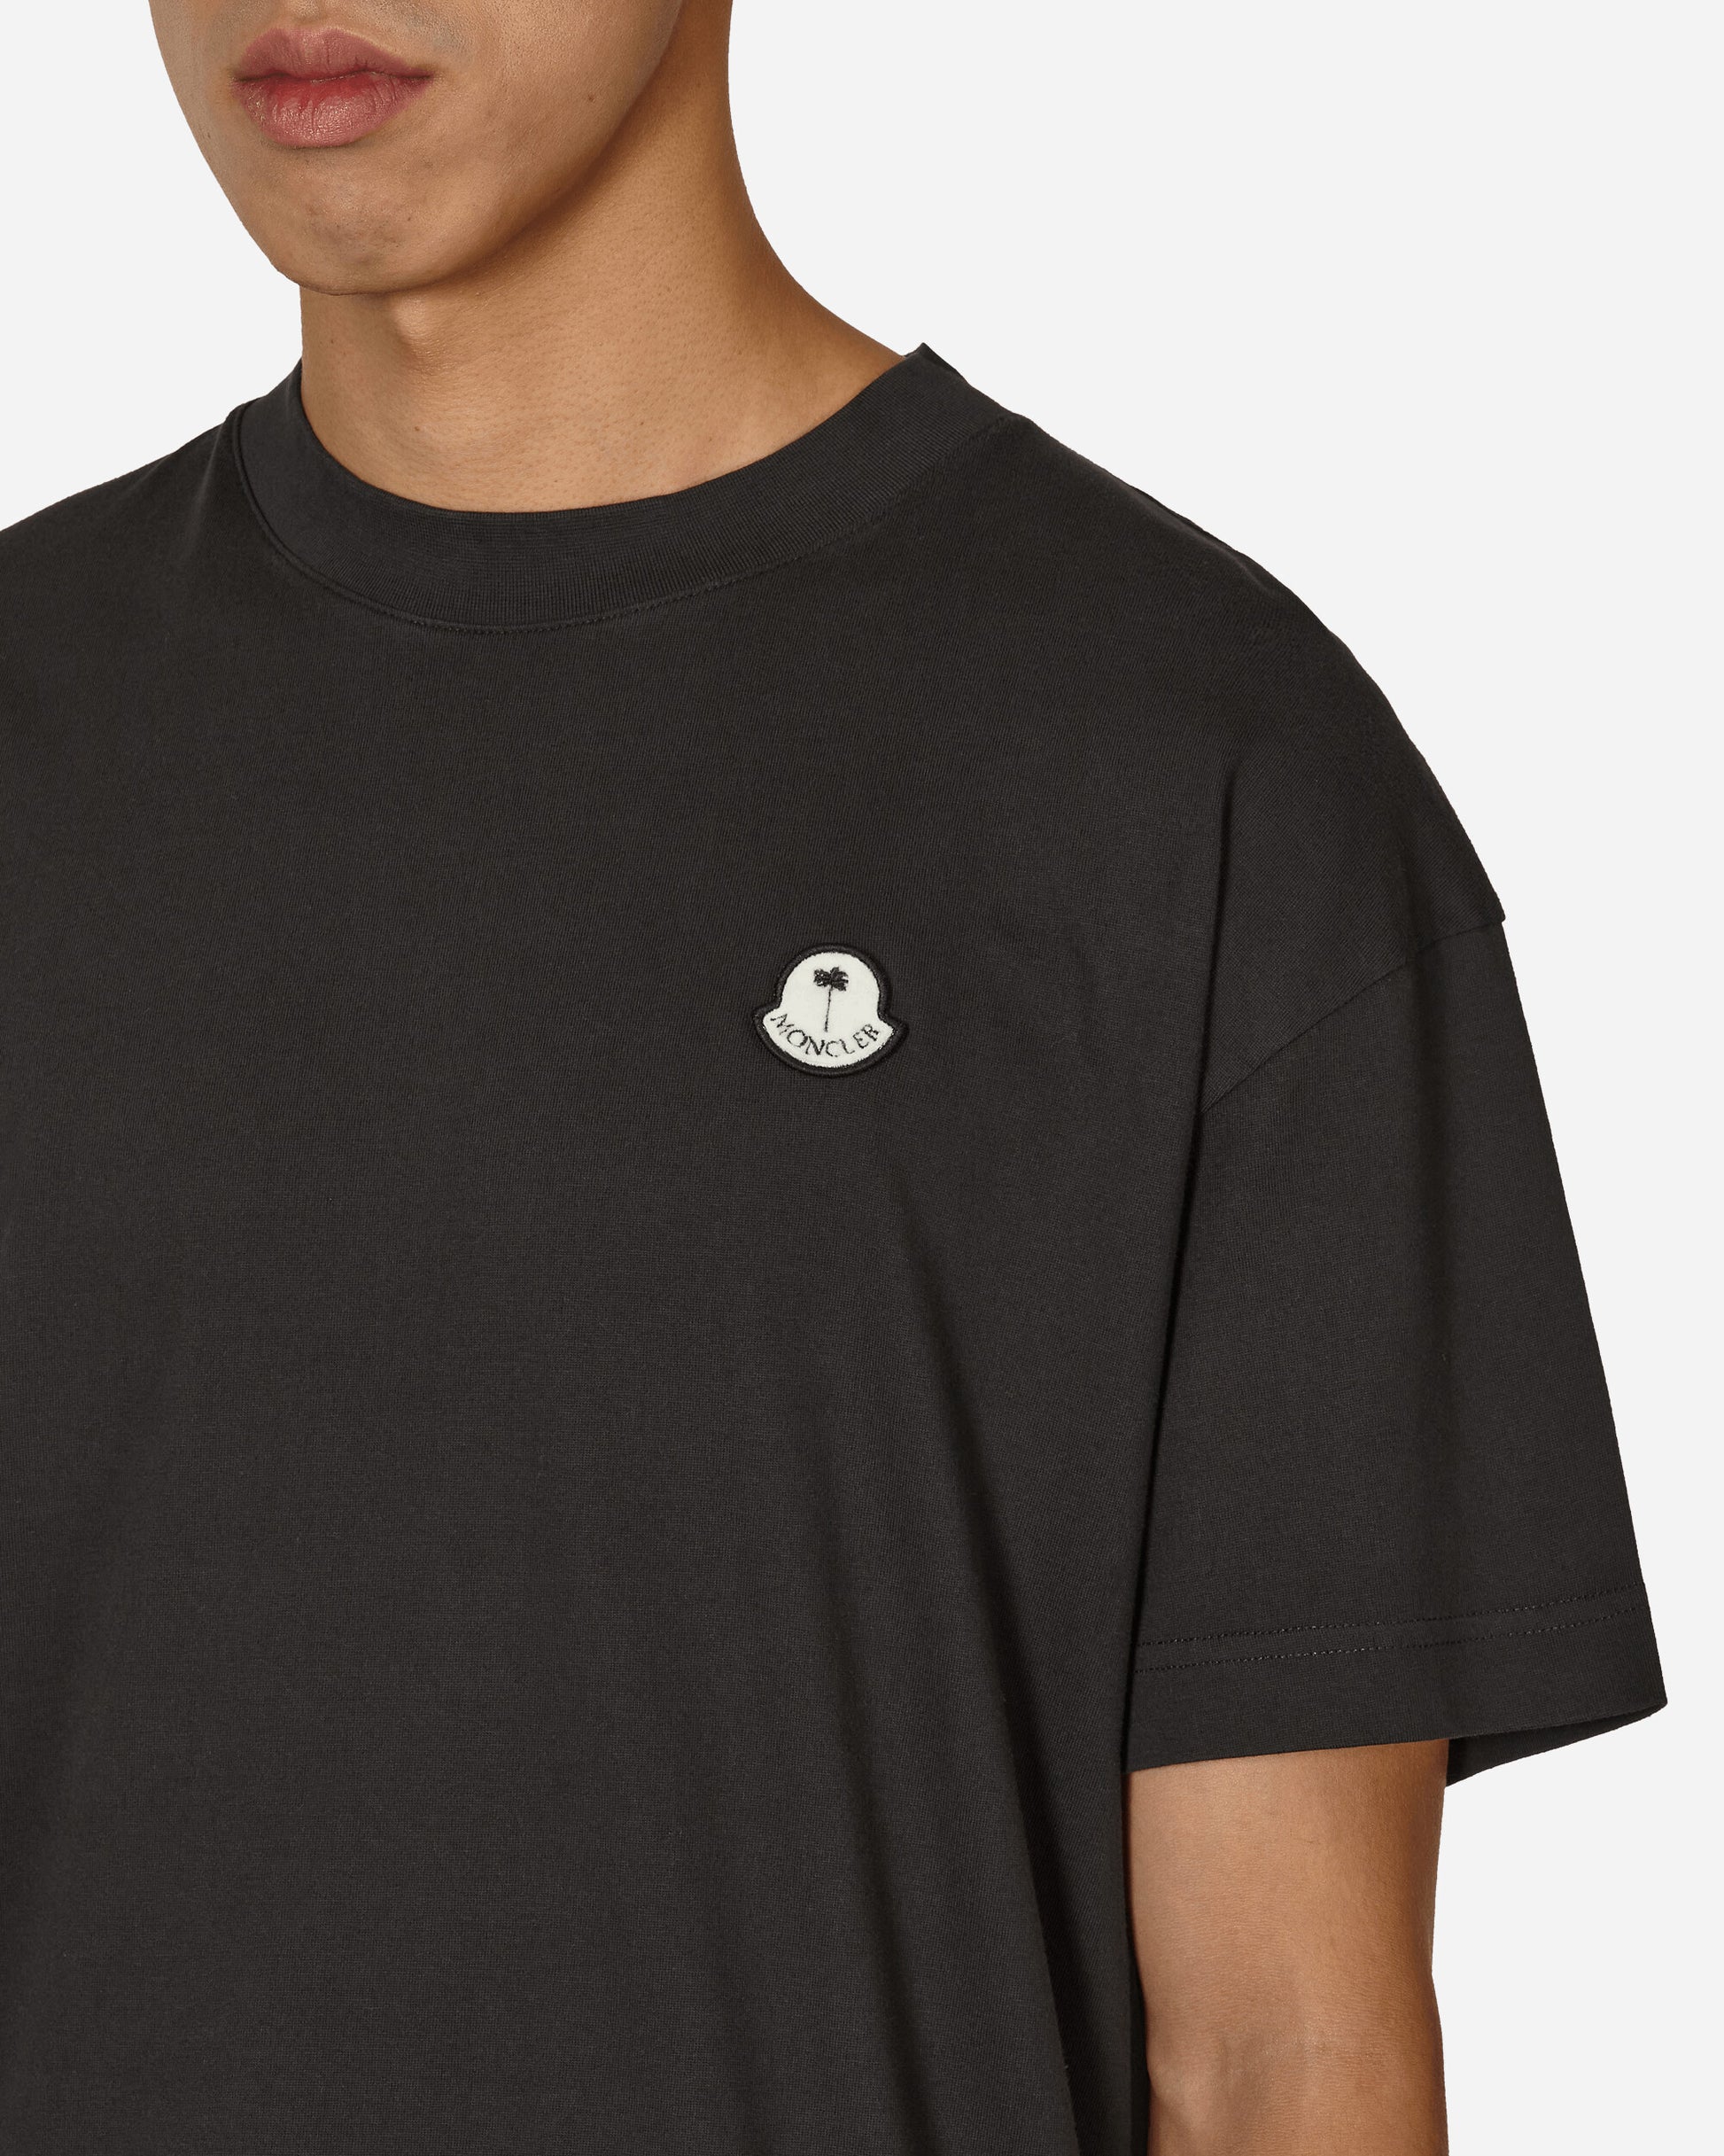 Moncler Genius T-Shirt X Palm Angels Black T-Shirts Shortsleeve 8C00003M3568 999